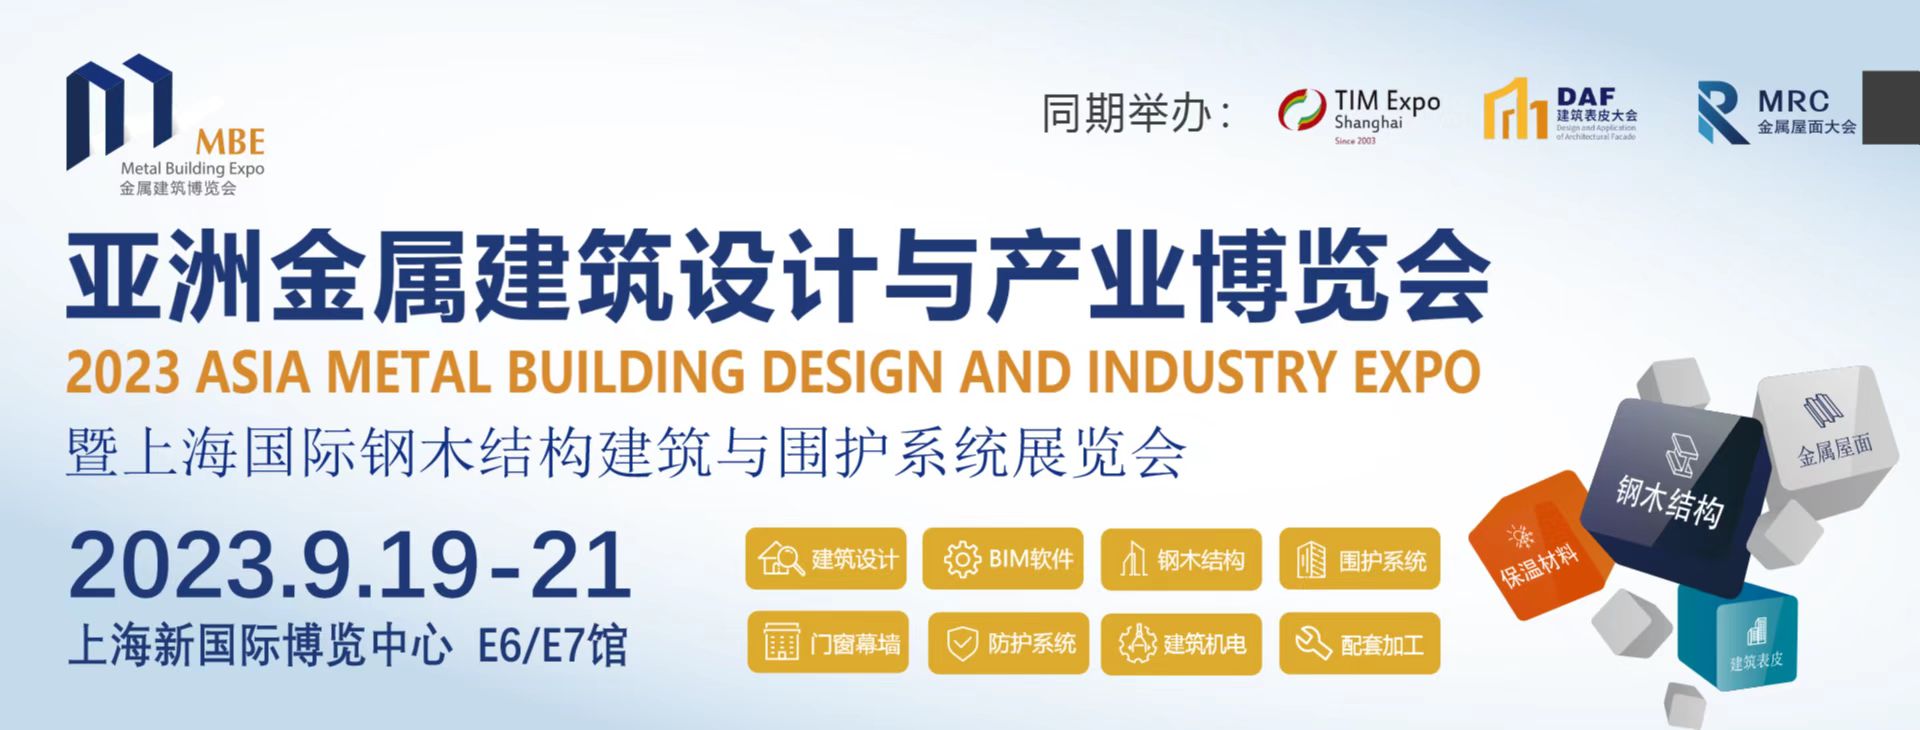 2023亚洲金属建筑设计与产业博览会 2023 Asia Metal Building Design and Industry Expo